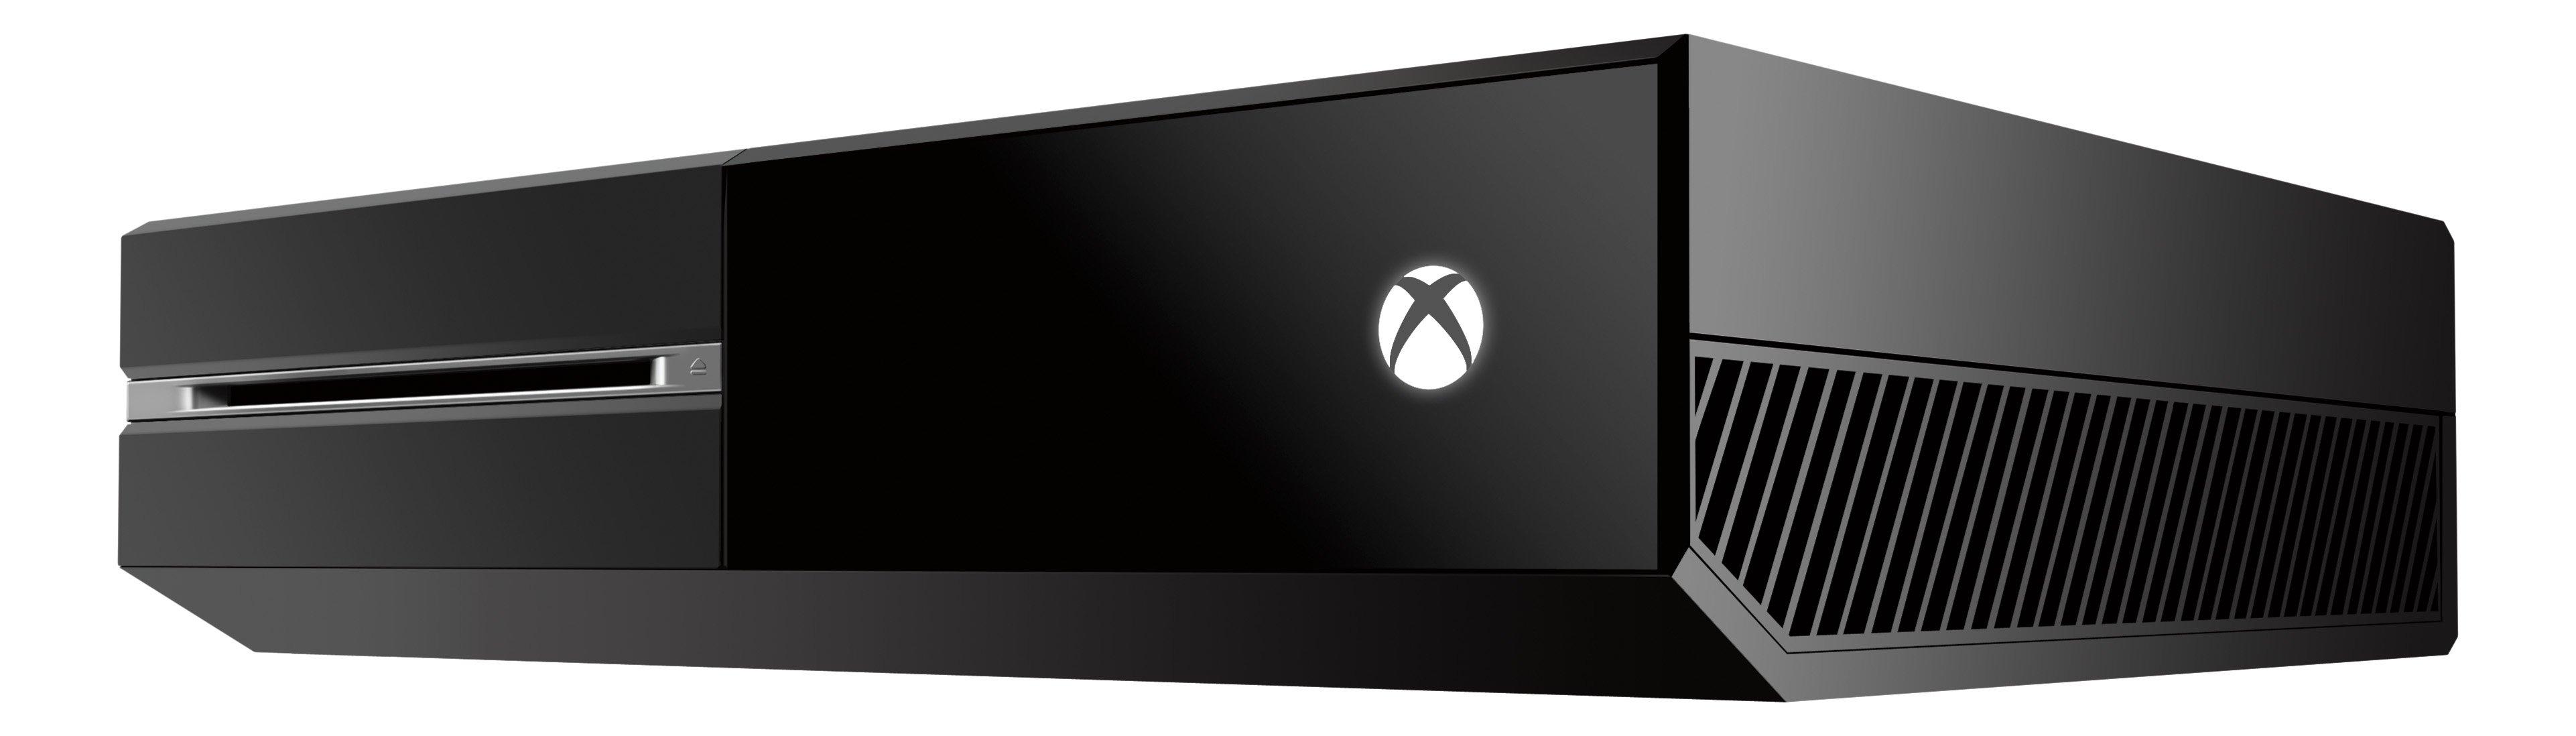 Microsoft Xbox One 1TB Console Black